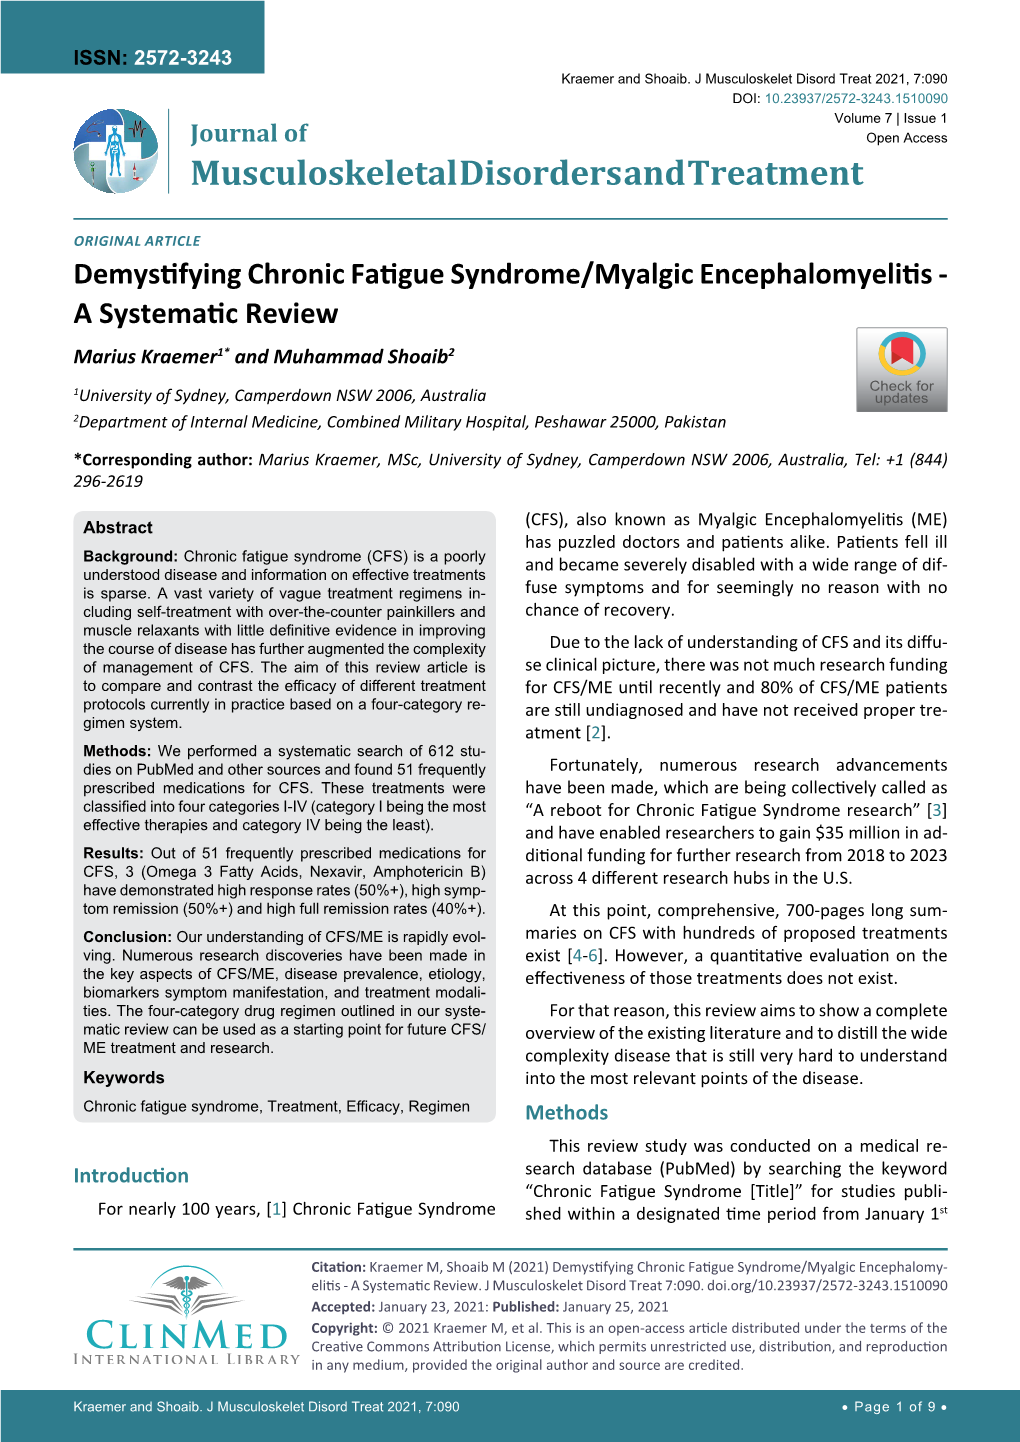 Demystifying Chronic Fatigue Syndrome/Myalgic Encephalomyelitis - a Systematic Review Marius Kraemer1* and Muhammad Shoaib2